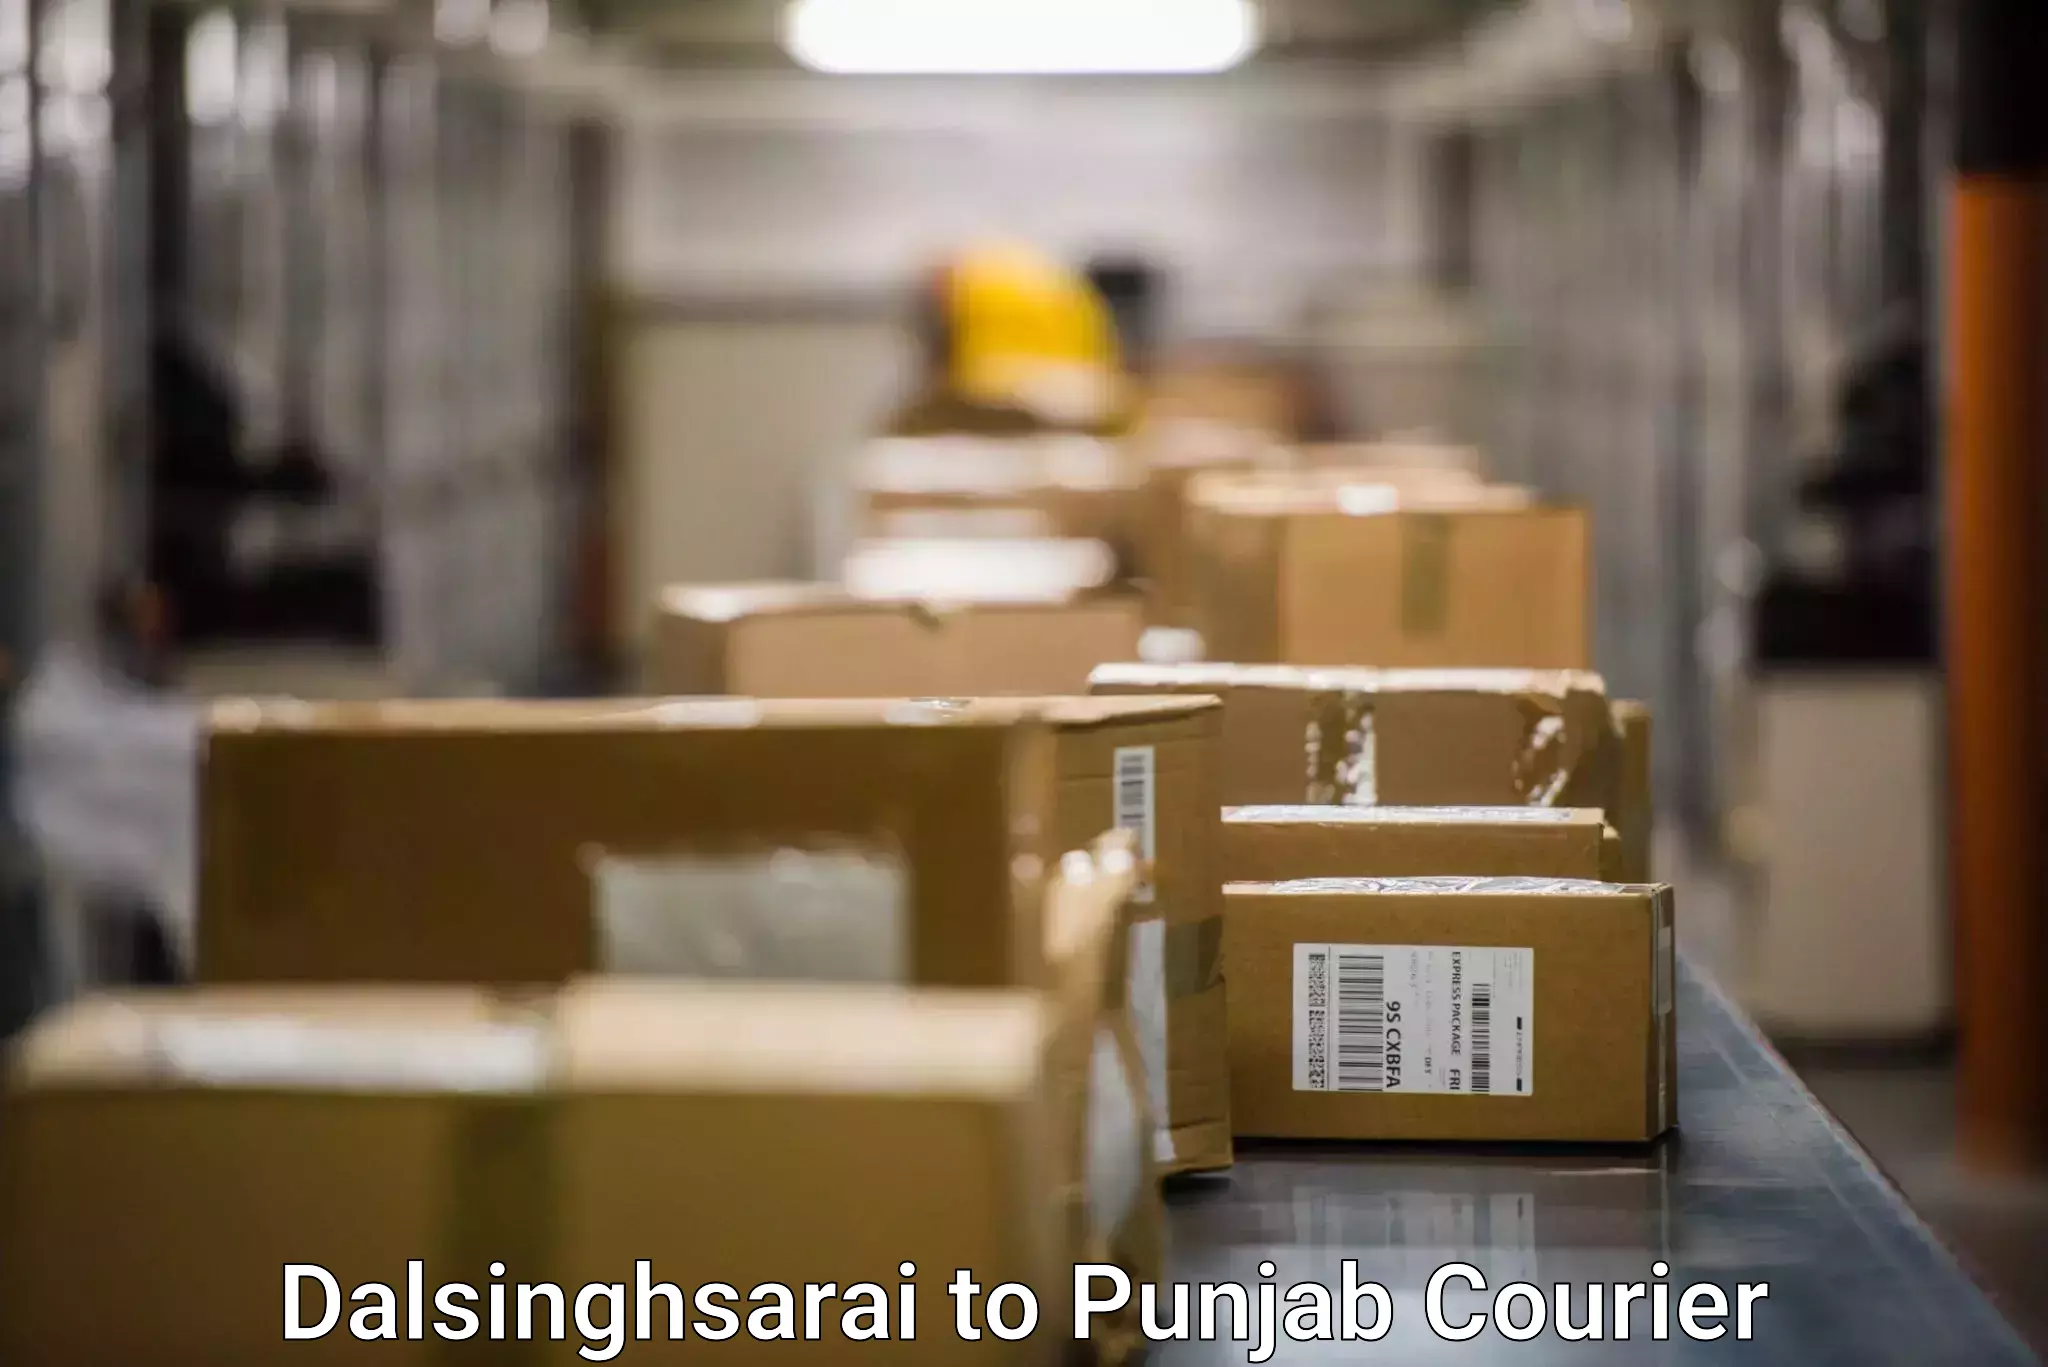 International logistics solutions Dalsinghsarai to Punjab